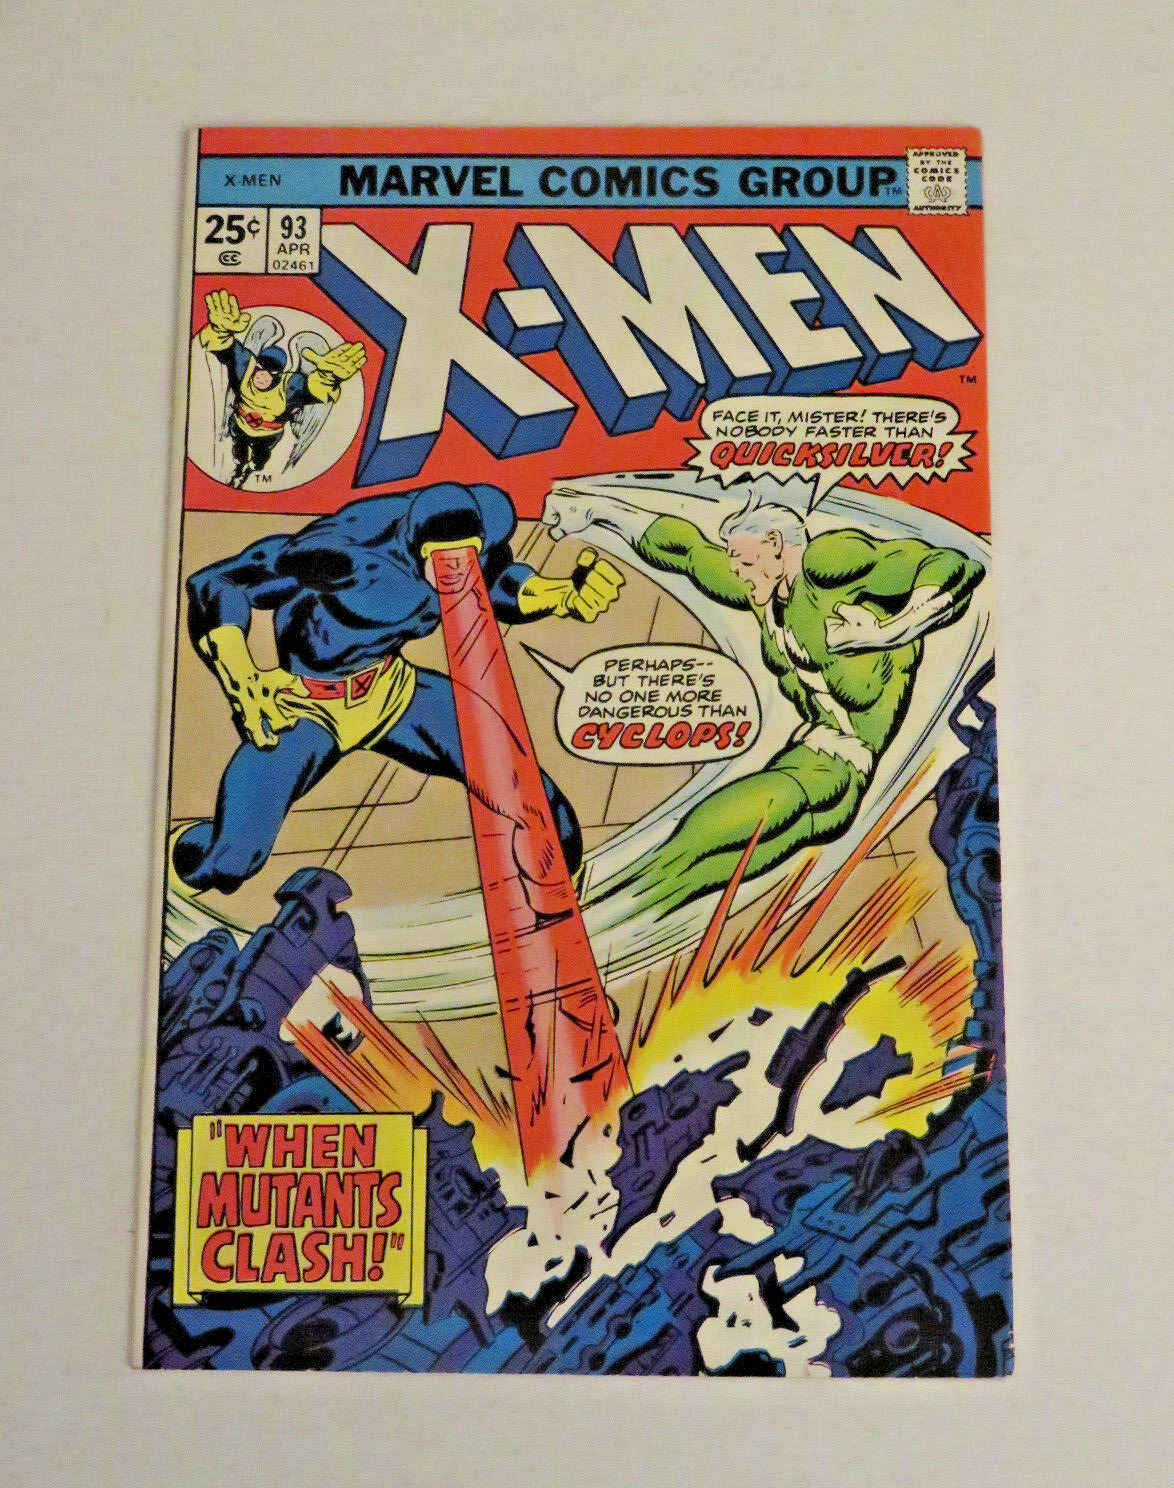 X-MEN #93 VF John Buscema Cover 1975